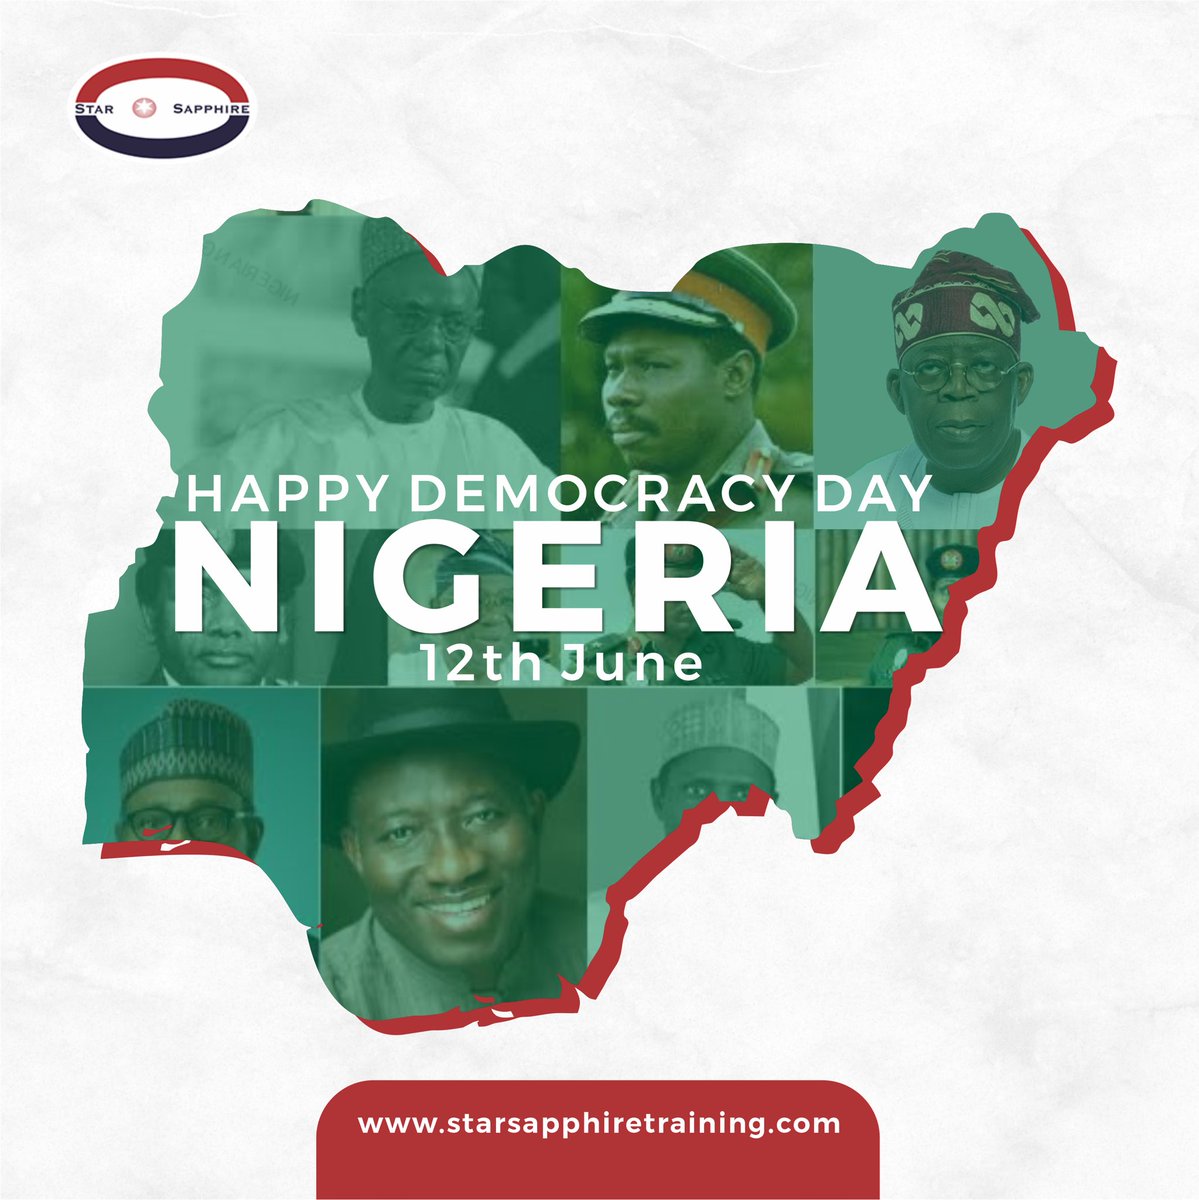 Happy Democracy Day, Nigeria! Let's celebrate the freedom and unity of our great nation.
#NigeriaDemocracyDay #OneNationOneDestiny